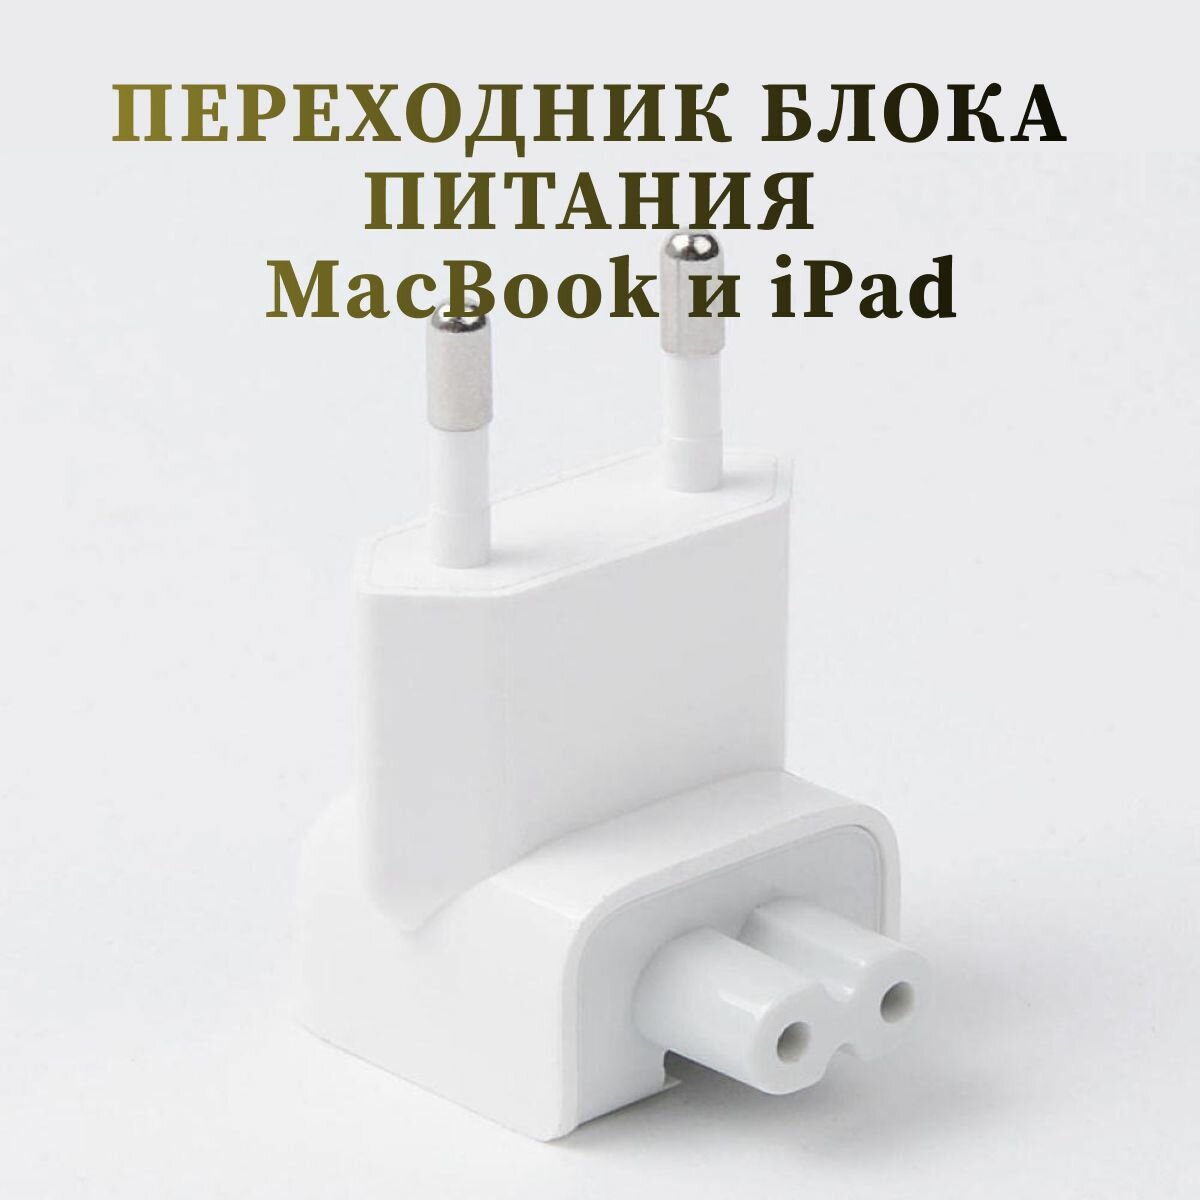 Вилка-переходник для устройств MacBook, iPad евровилка 12Вт / Адаптер для блока питания Макбук, Айпад